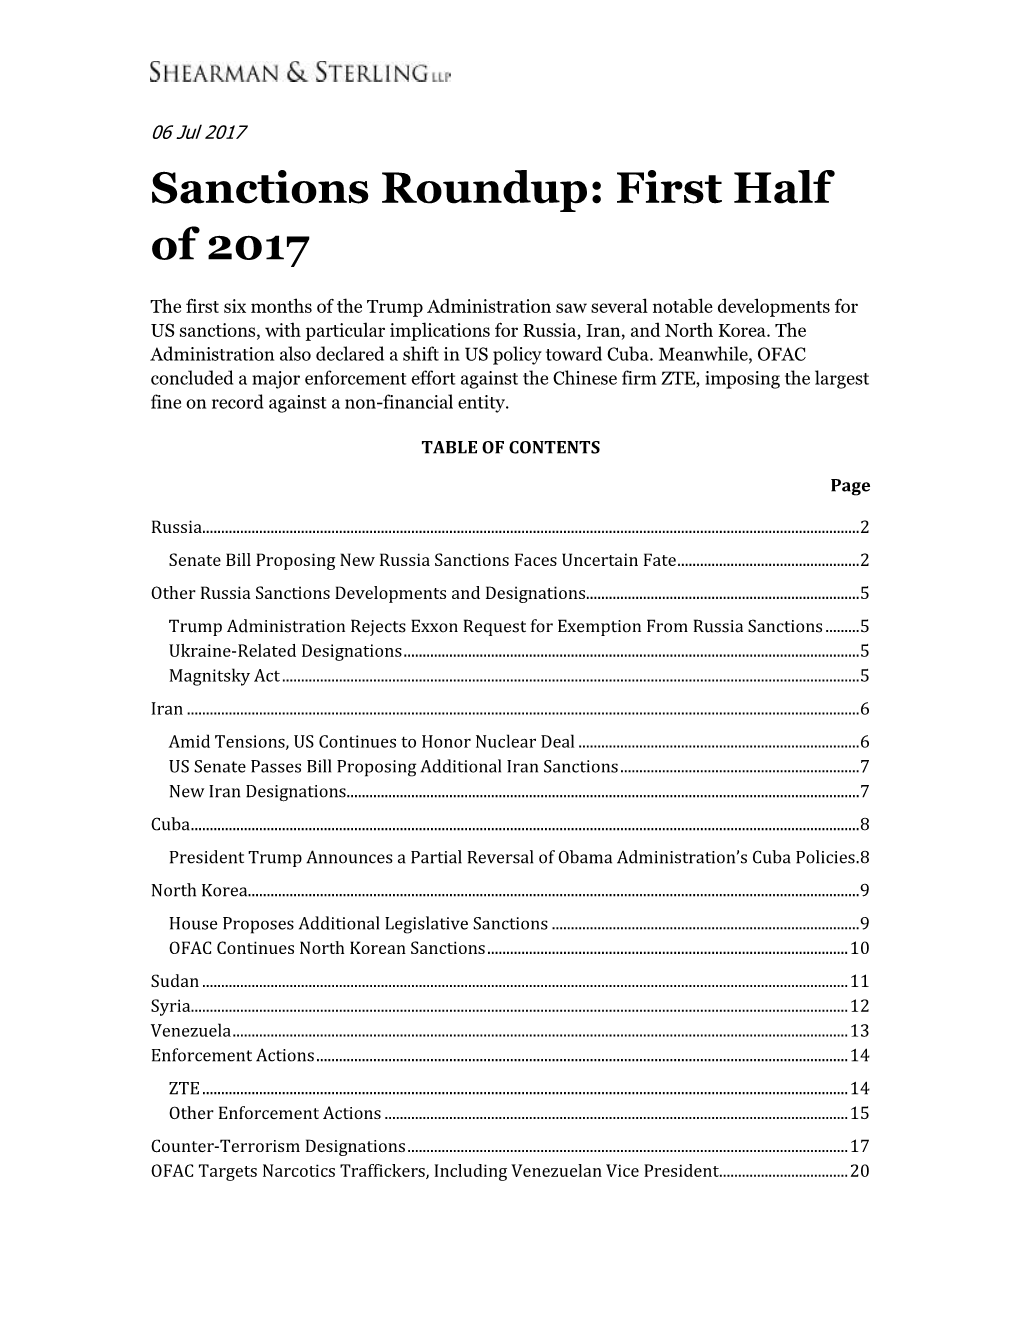 Sanctions Round Up